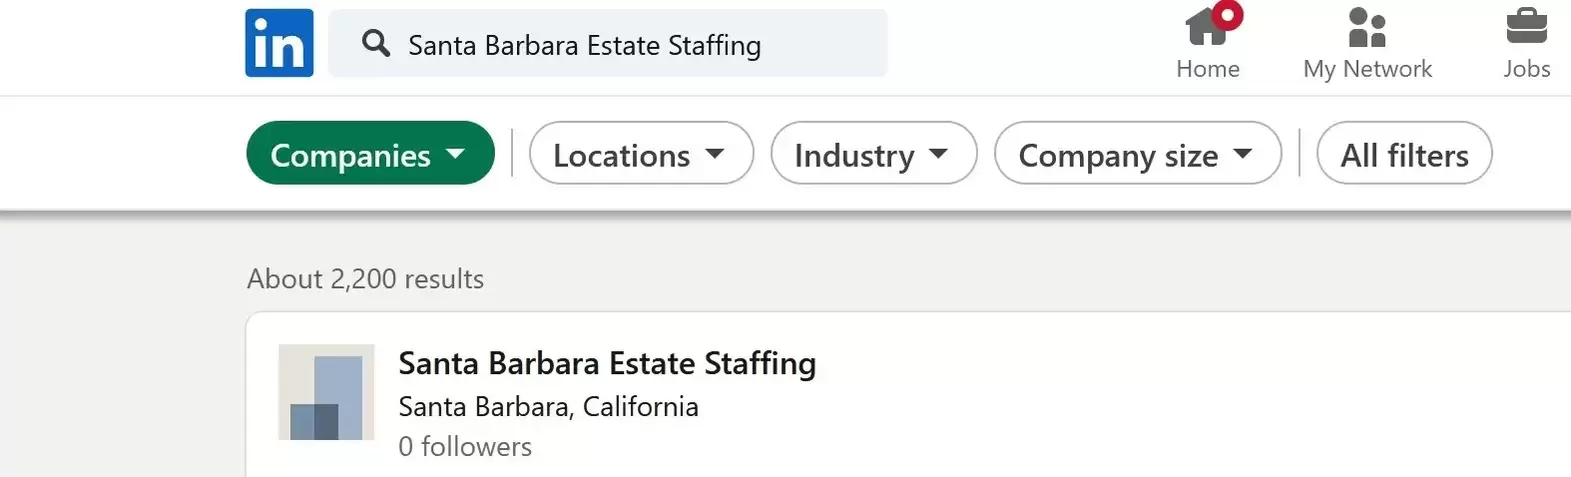 Santa Barbara Estate Staffing on LinkedIn